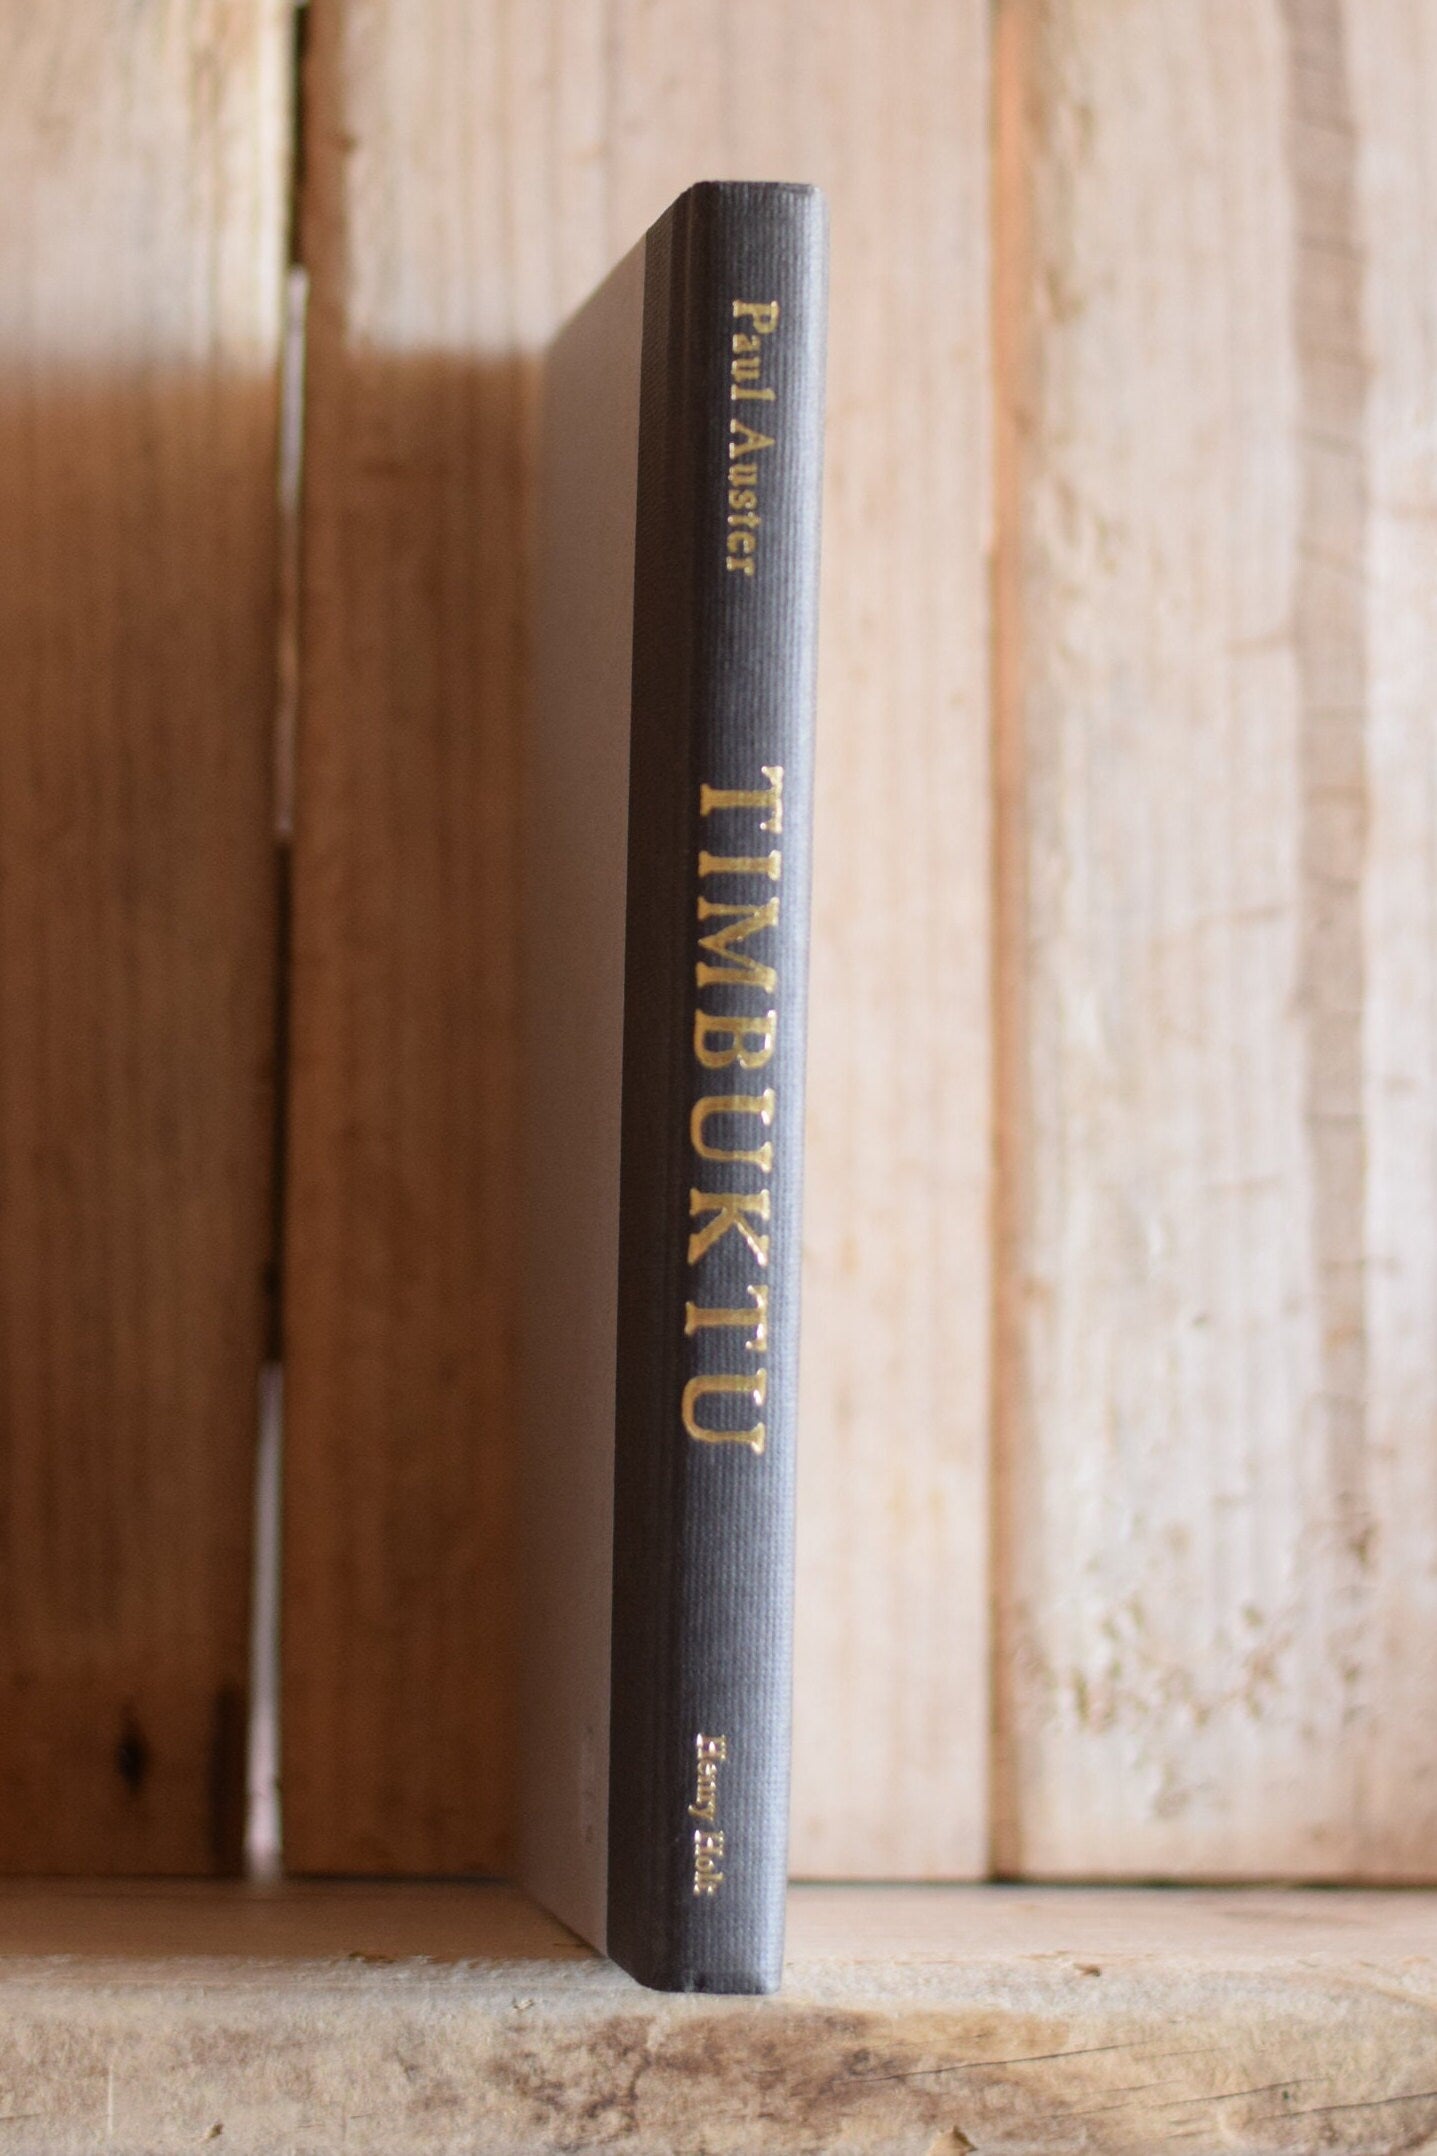 Vintage Fiction Hardback Novel: Paul Auster - Timbuktu FIRST EDITION/PRINTING